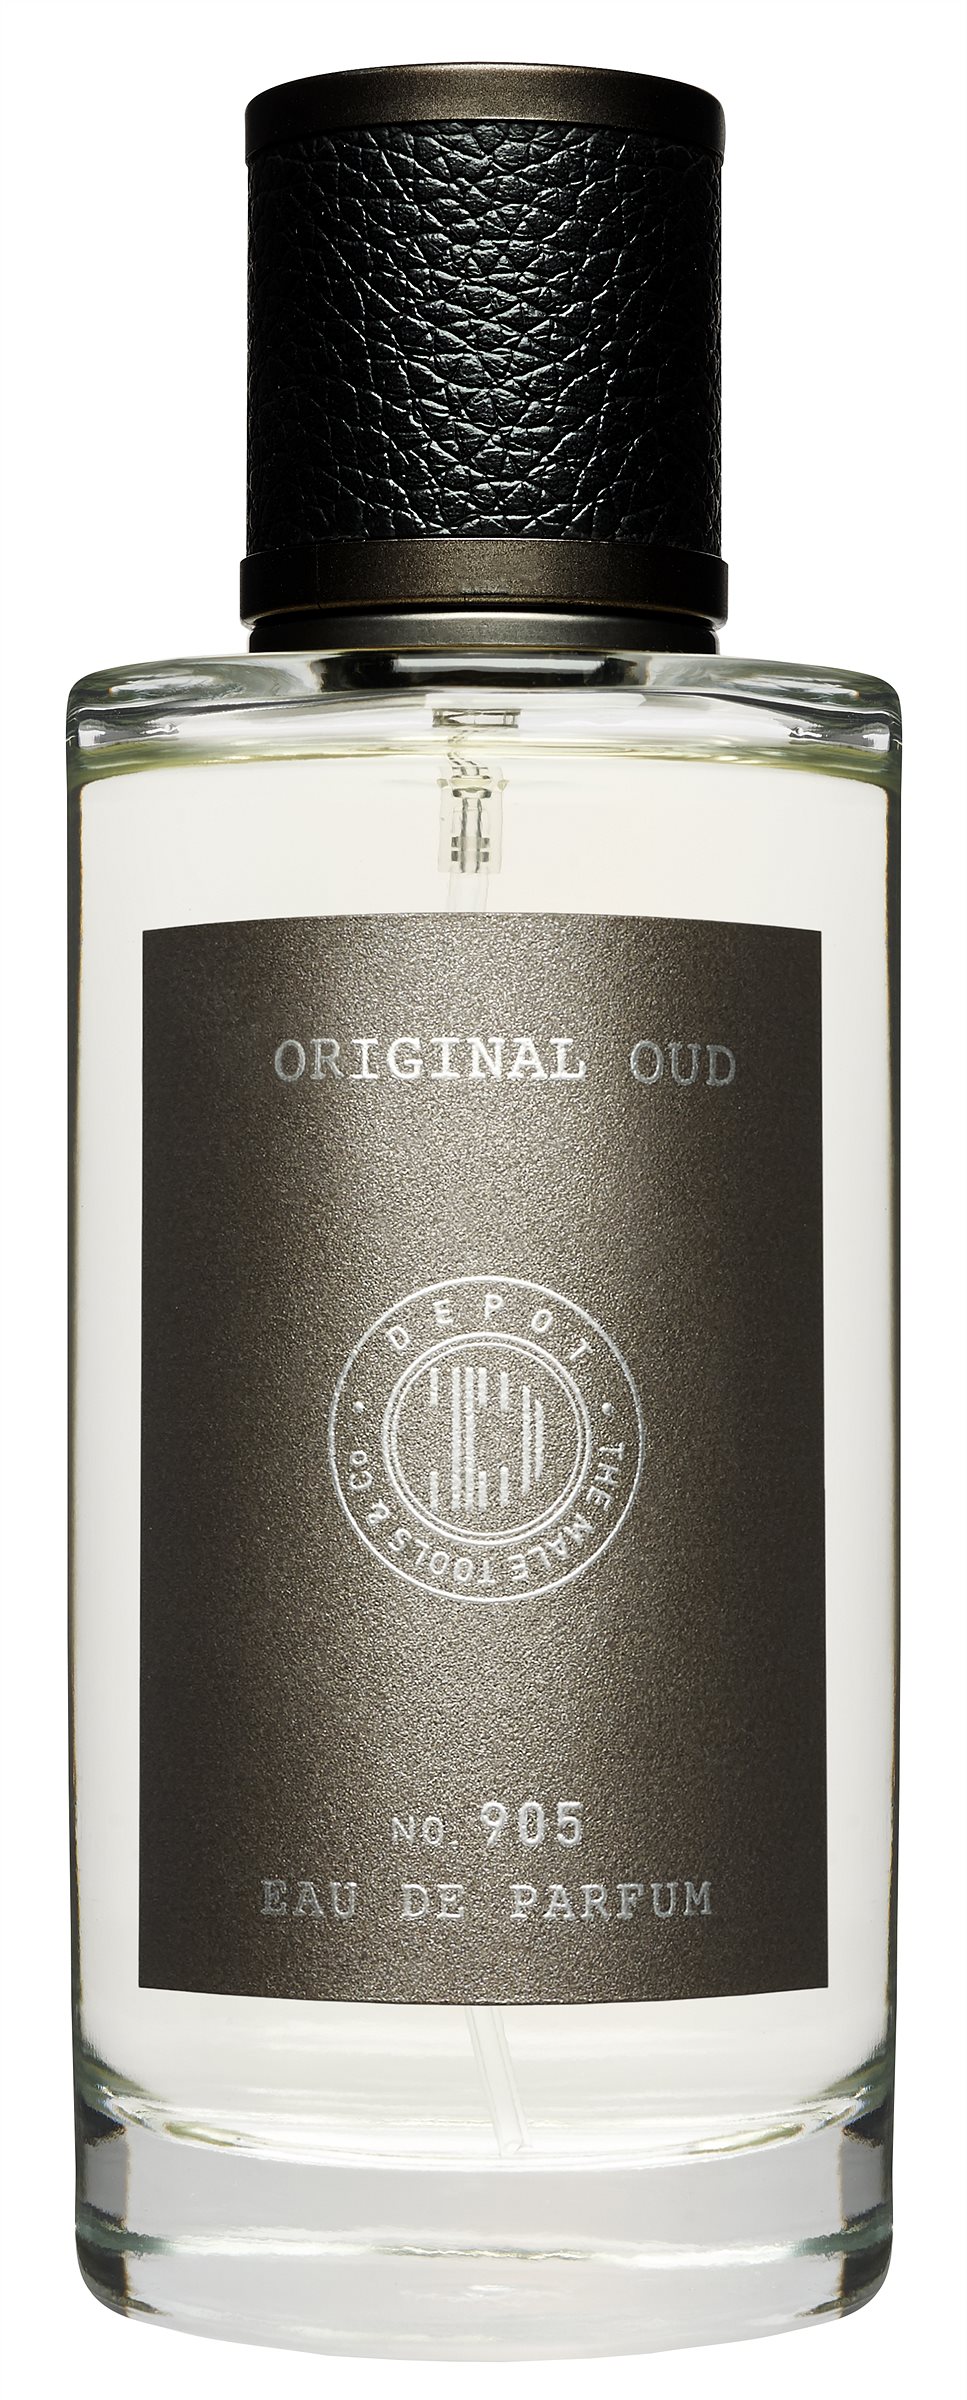 DEPOT_905 Original Oud Parfum_EUR 88,- 